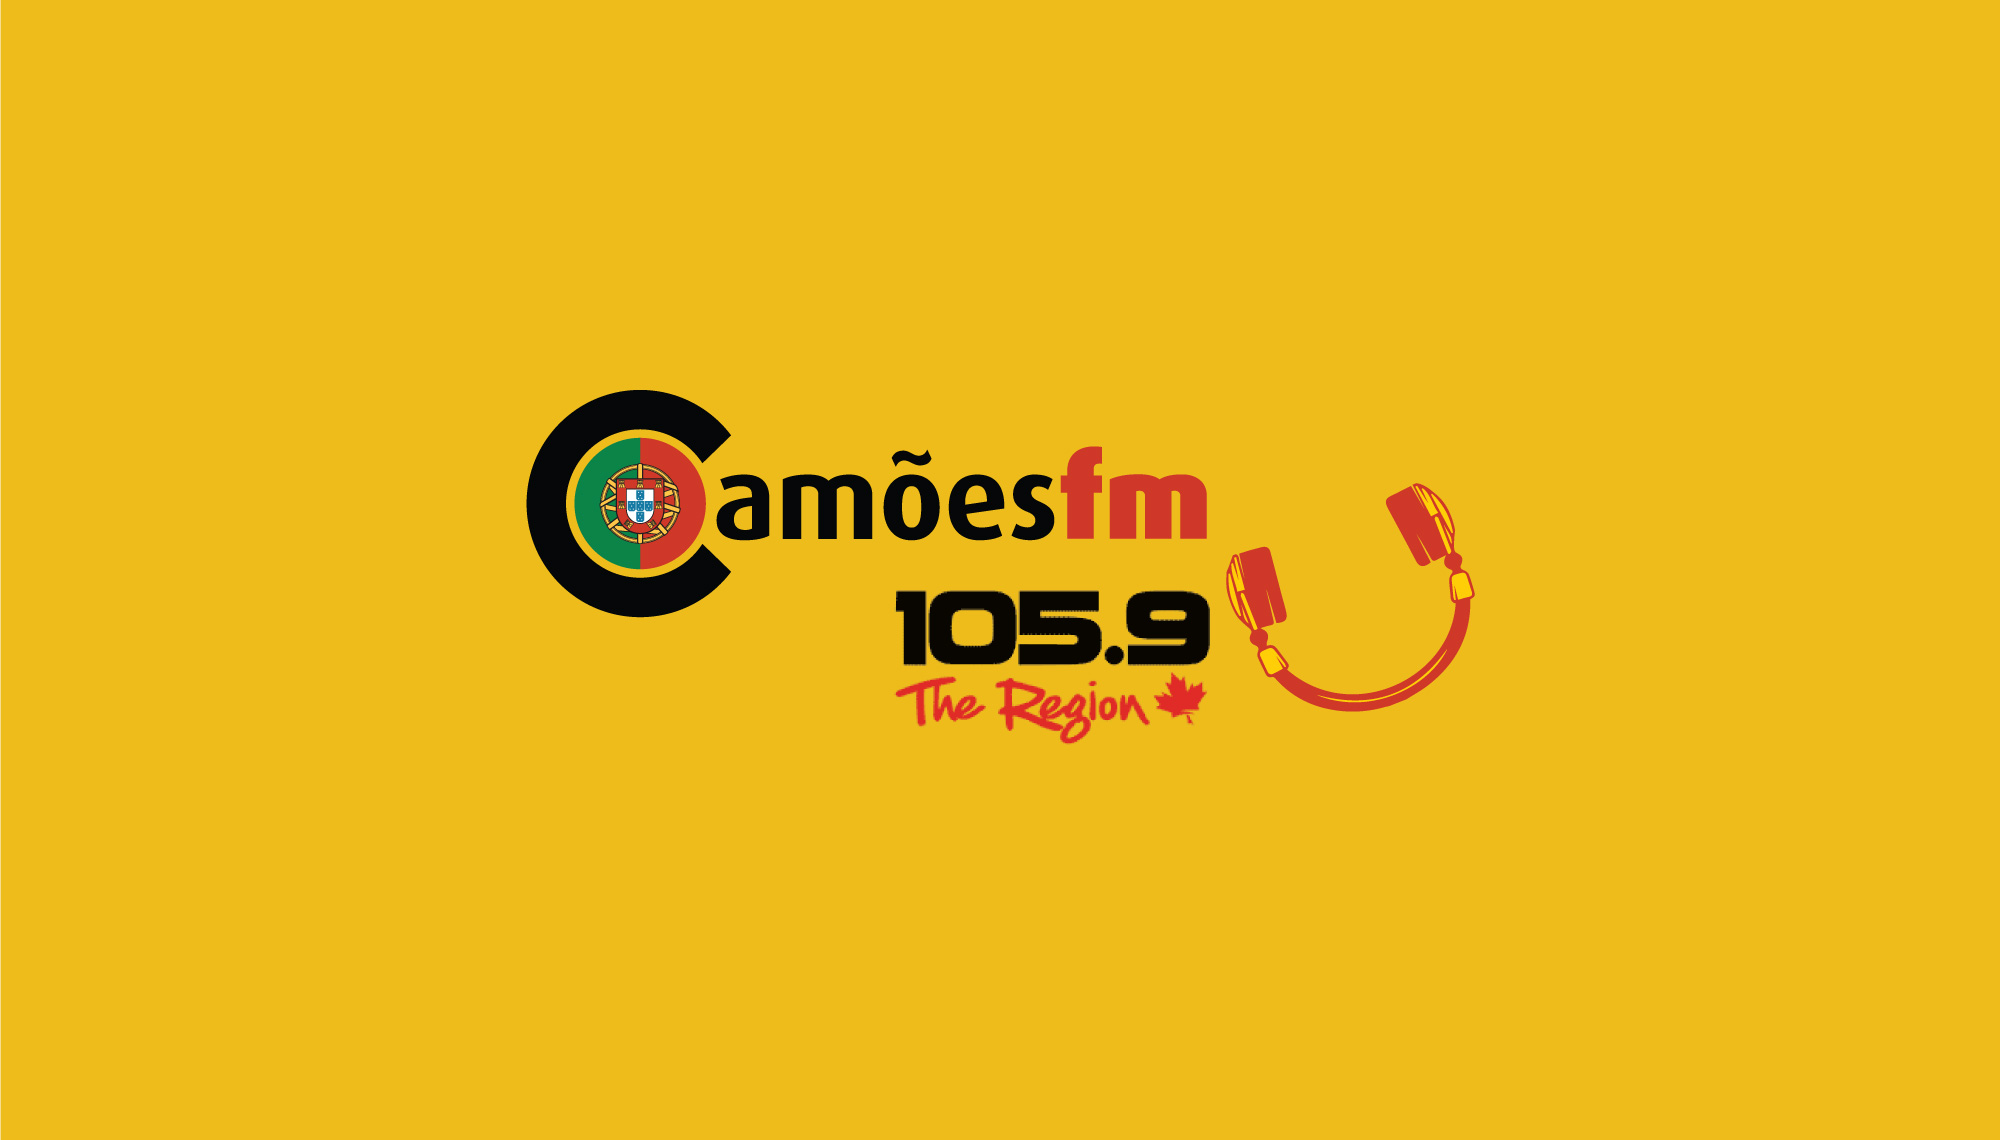 CamoesFM